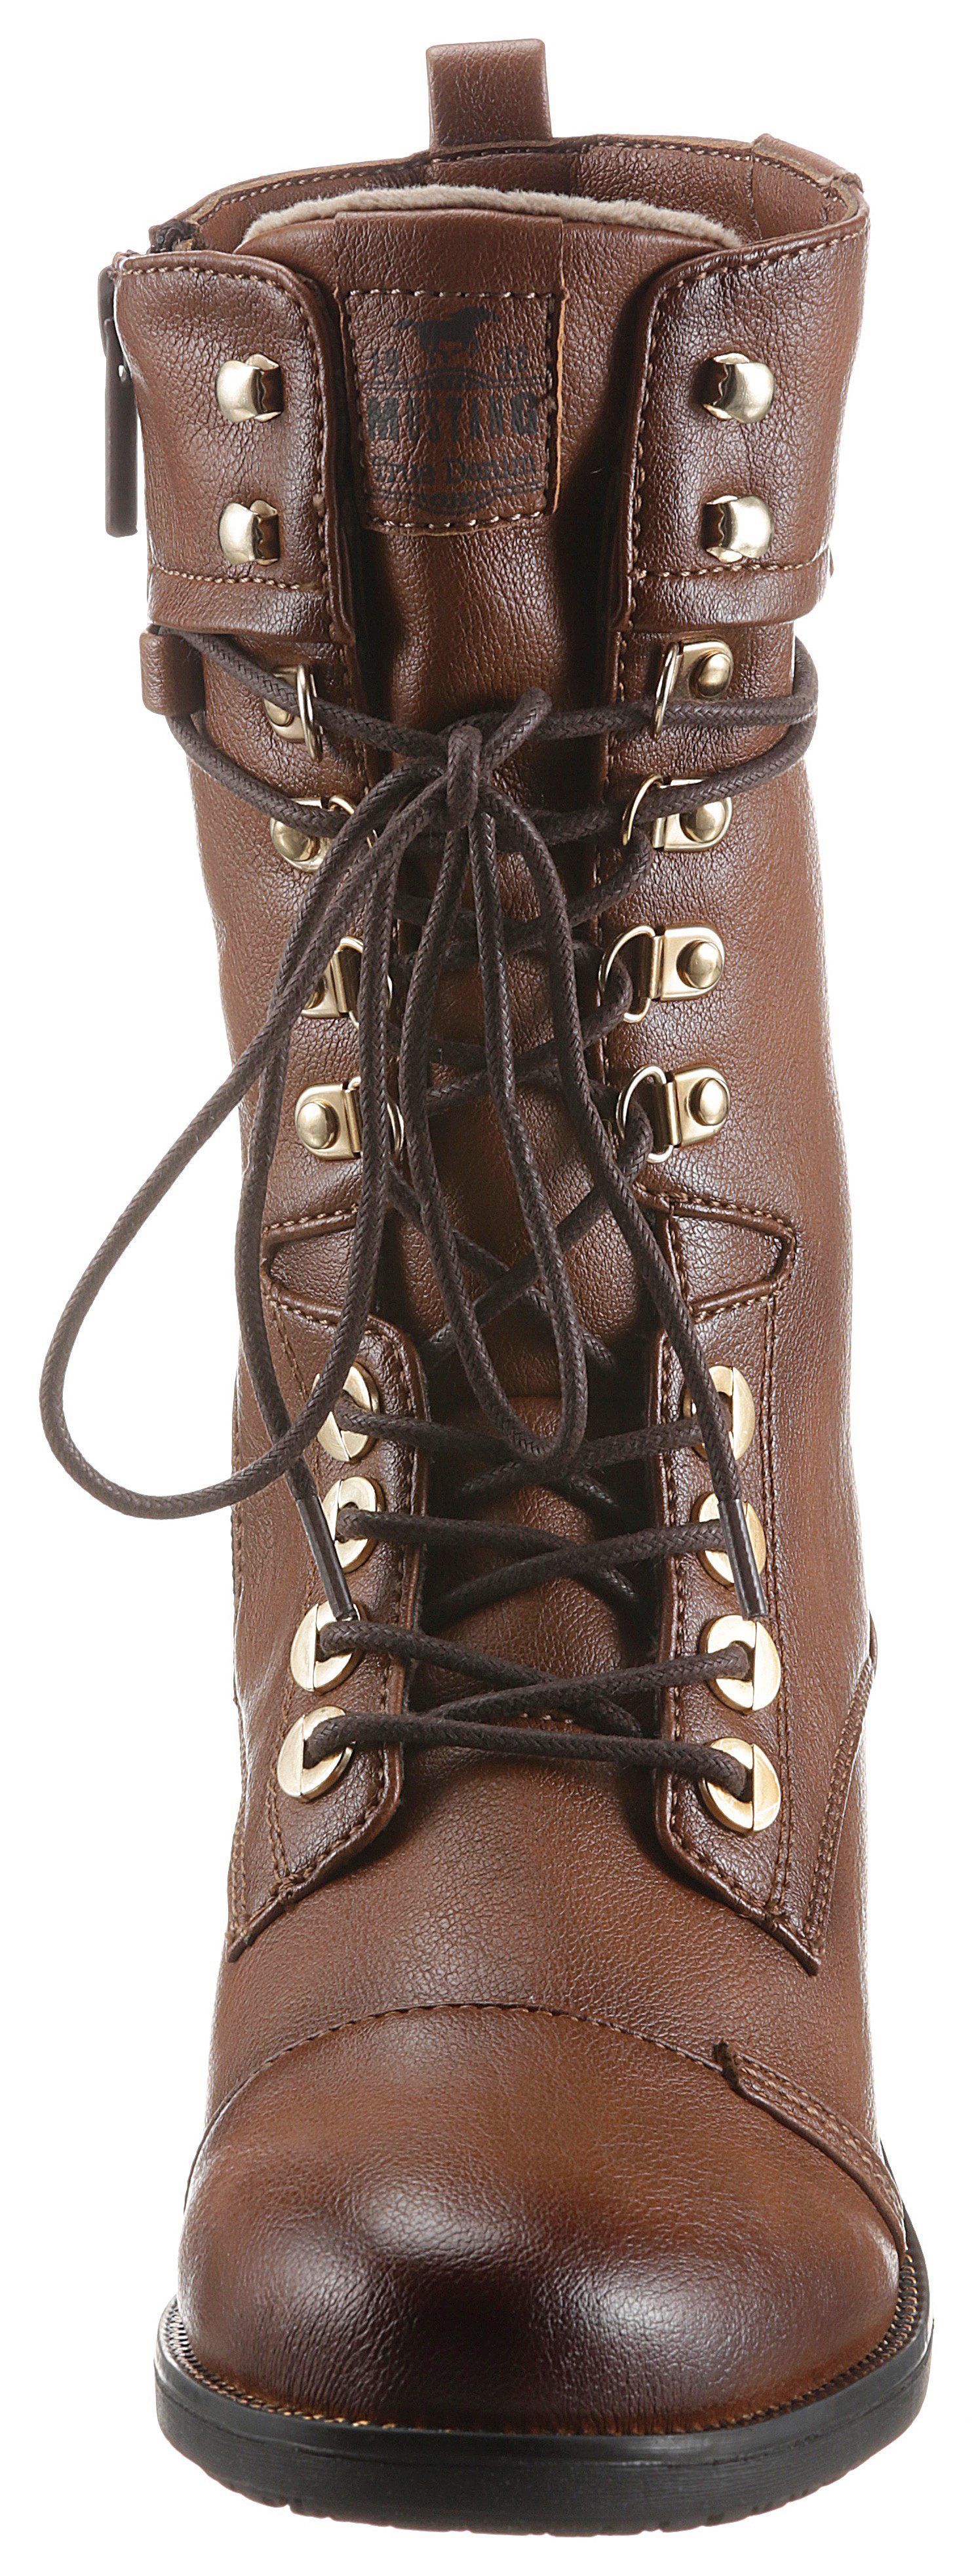 Mustang Ösen Shoes cognac-used goldfarbenen Schnürstiefelette mit